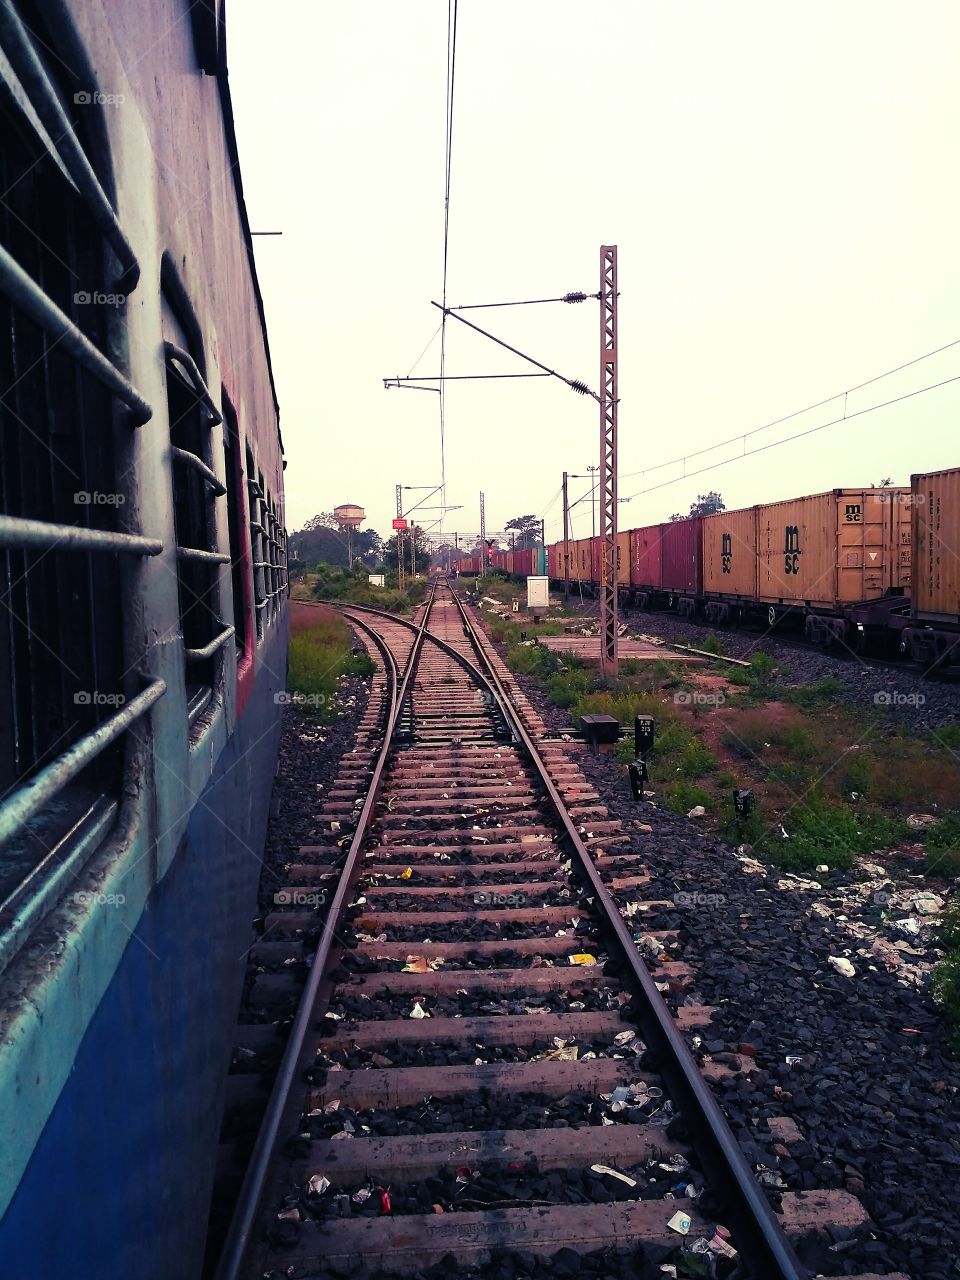 Journey on tracks (railway/train)